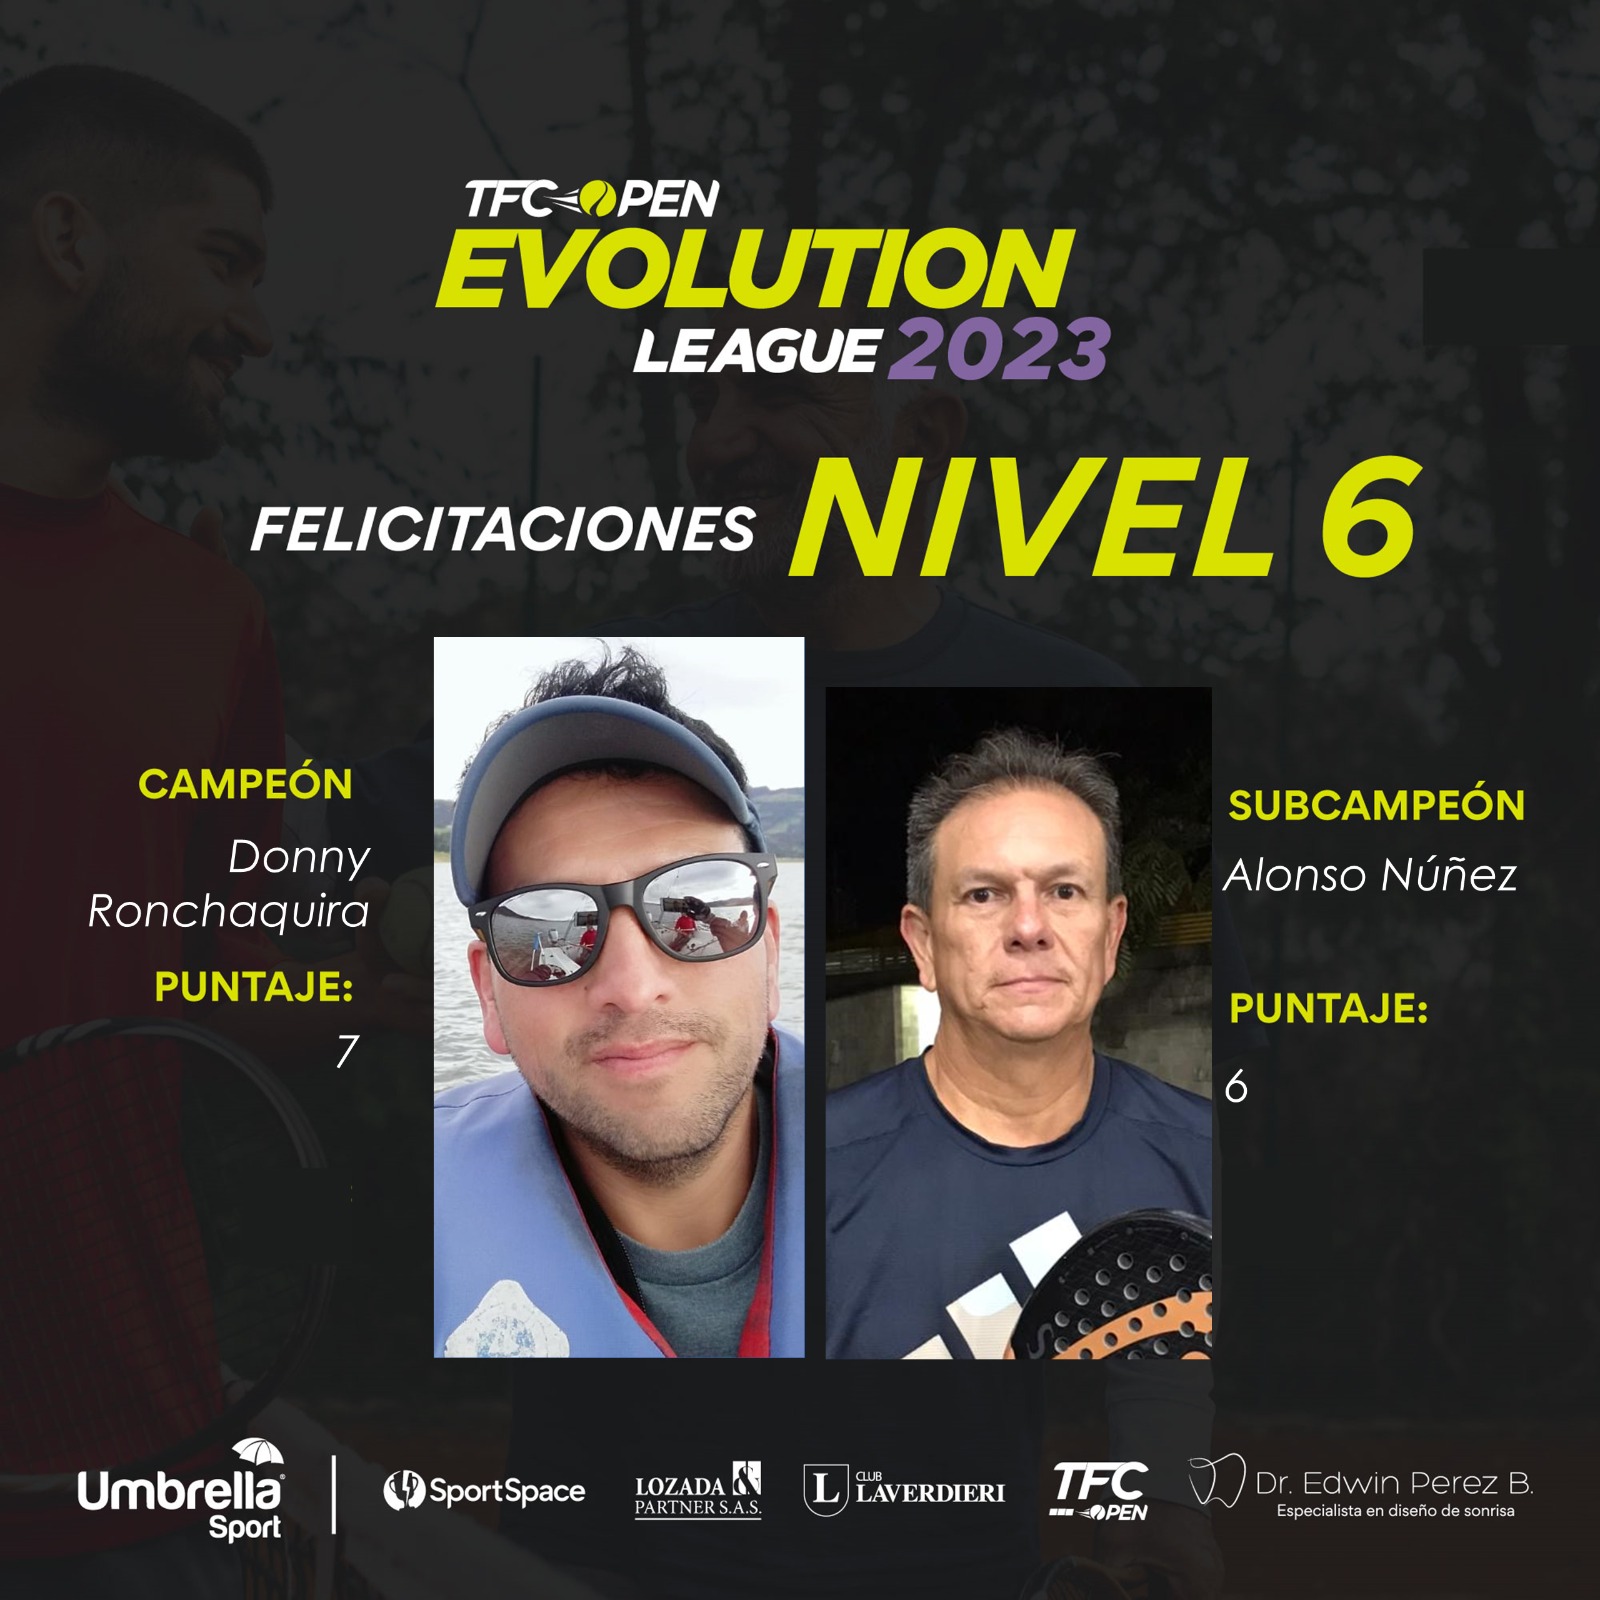 evolution-11-08 at 08.02.20